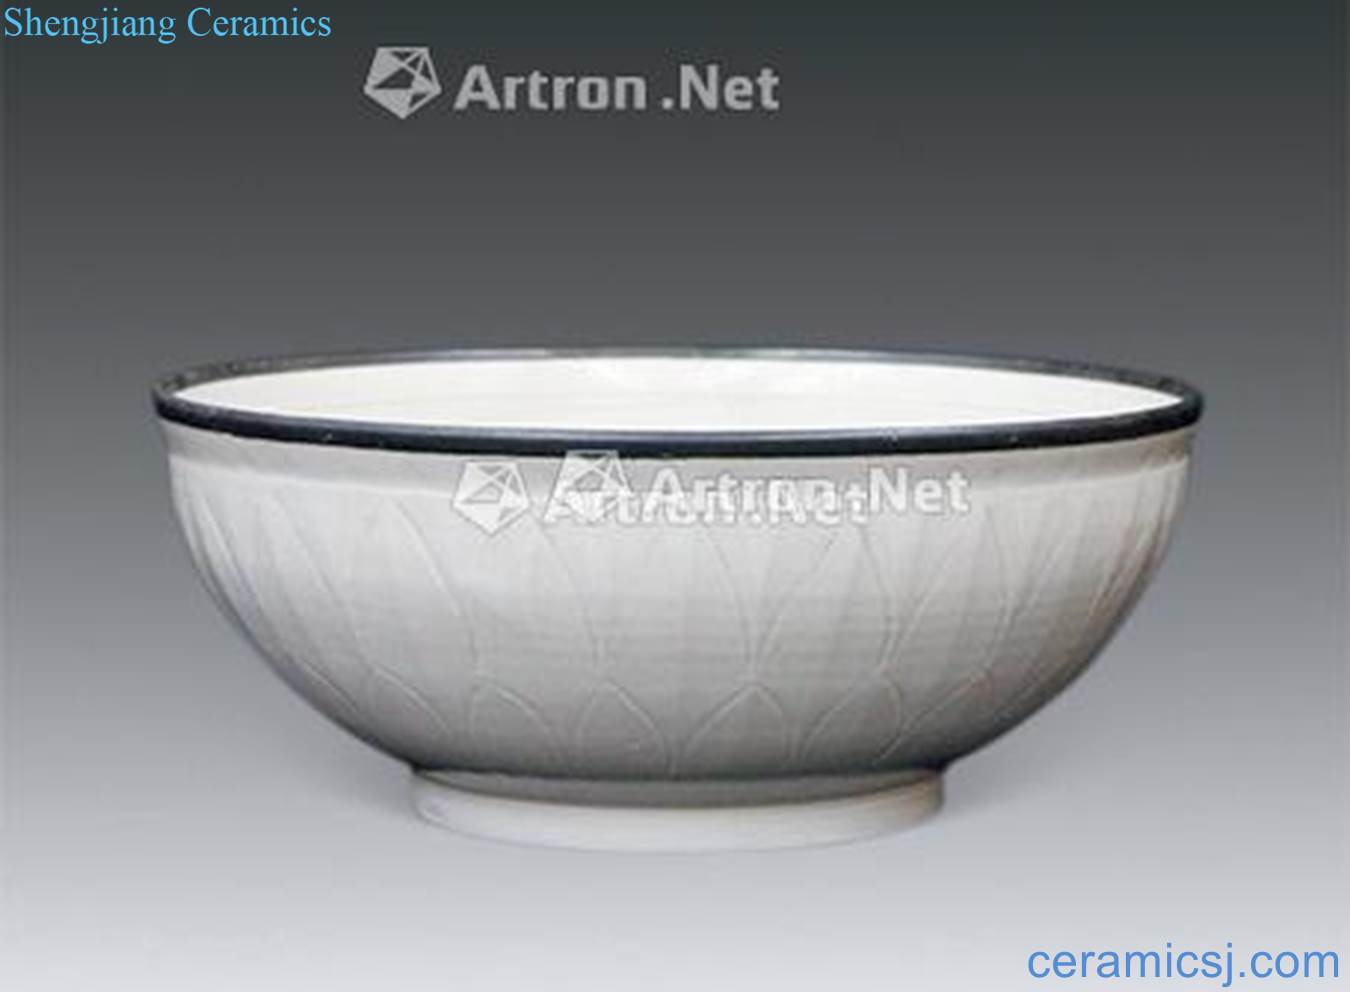 The song dynasty kiln bowl silver edge decorative pattern